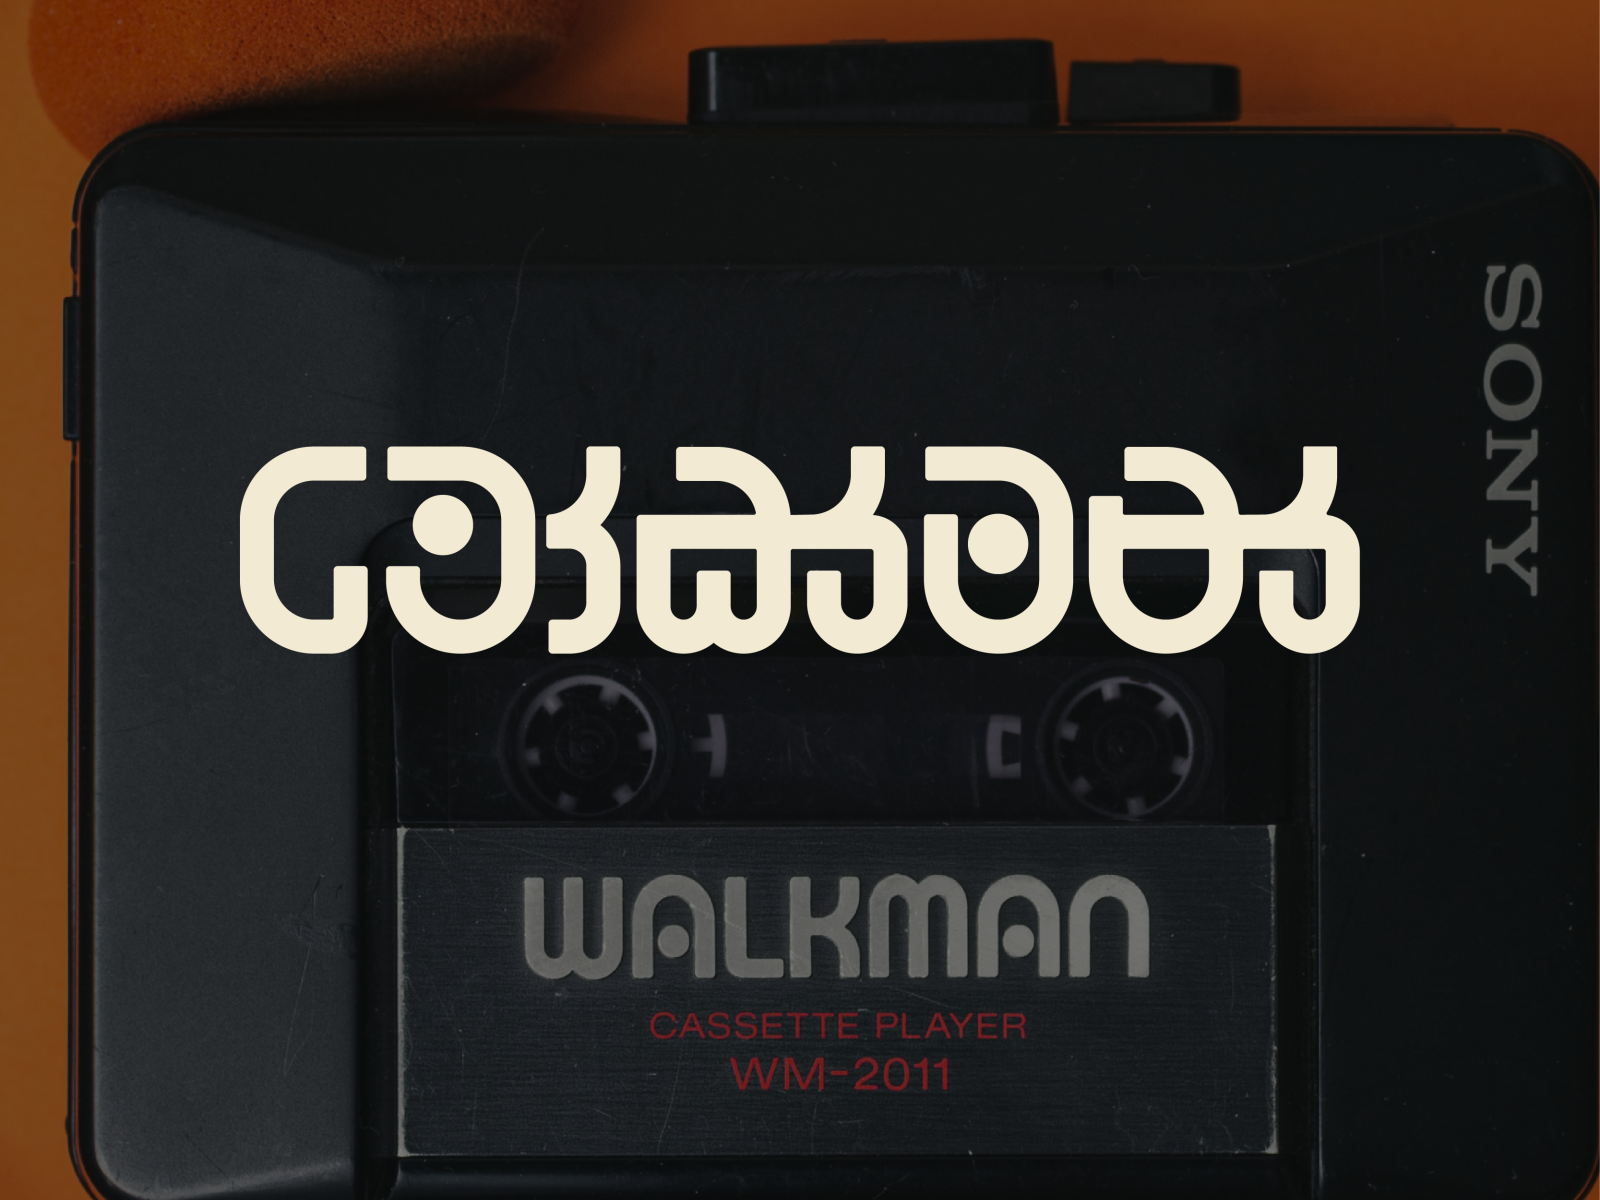 Walkman Wallpaper Orange big walkman logo hi res by HackitZ on DeviantArt